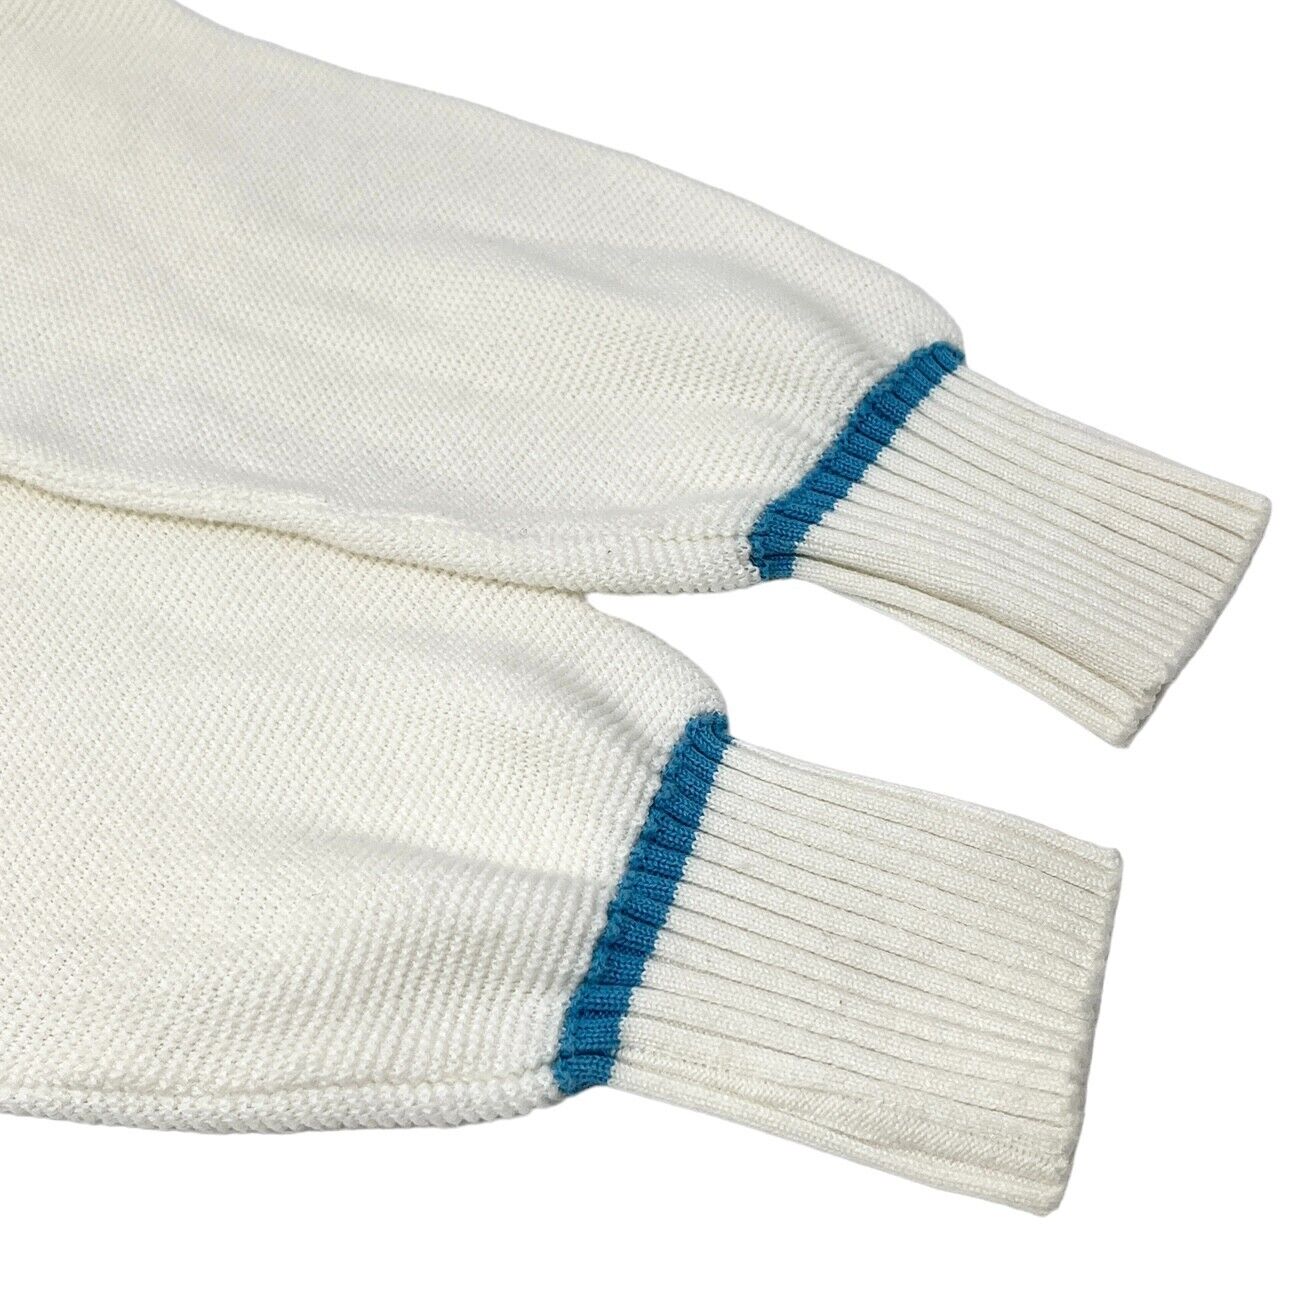 Christian Dior Sport Vintage Big Logo Knit Top #L Pullover White Cotton RankAB+